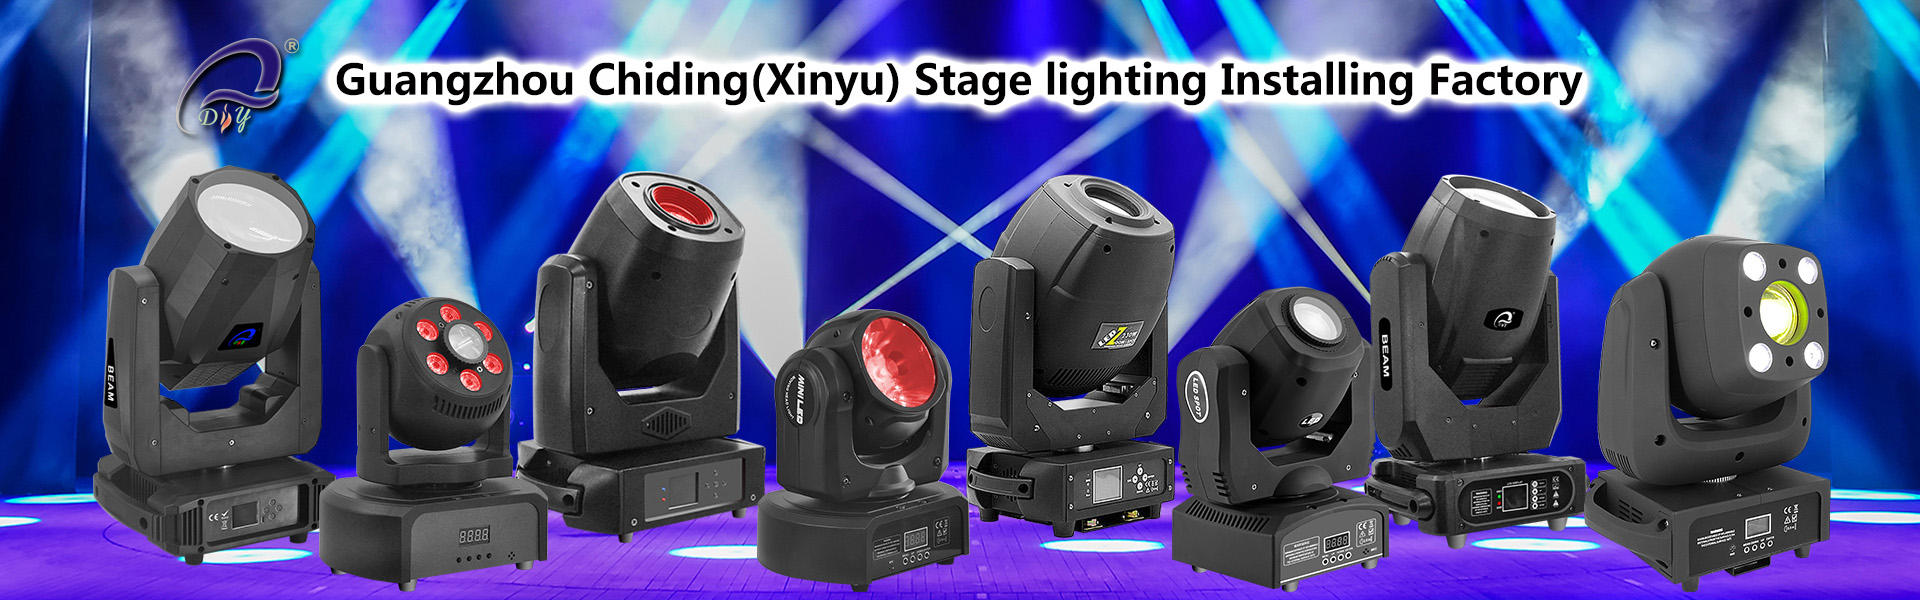 stage lights,moving head light,led par light,guangzhou chiding stage lighting co ltd